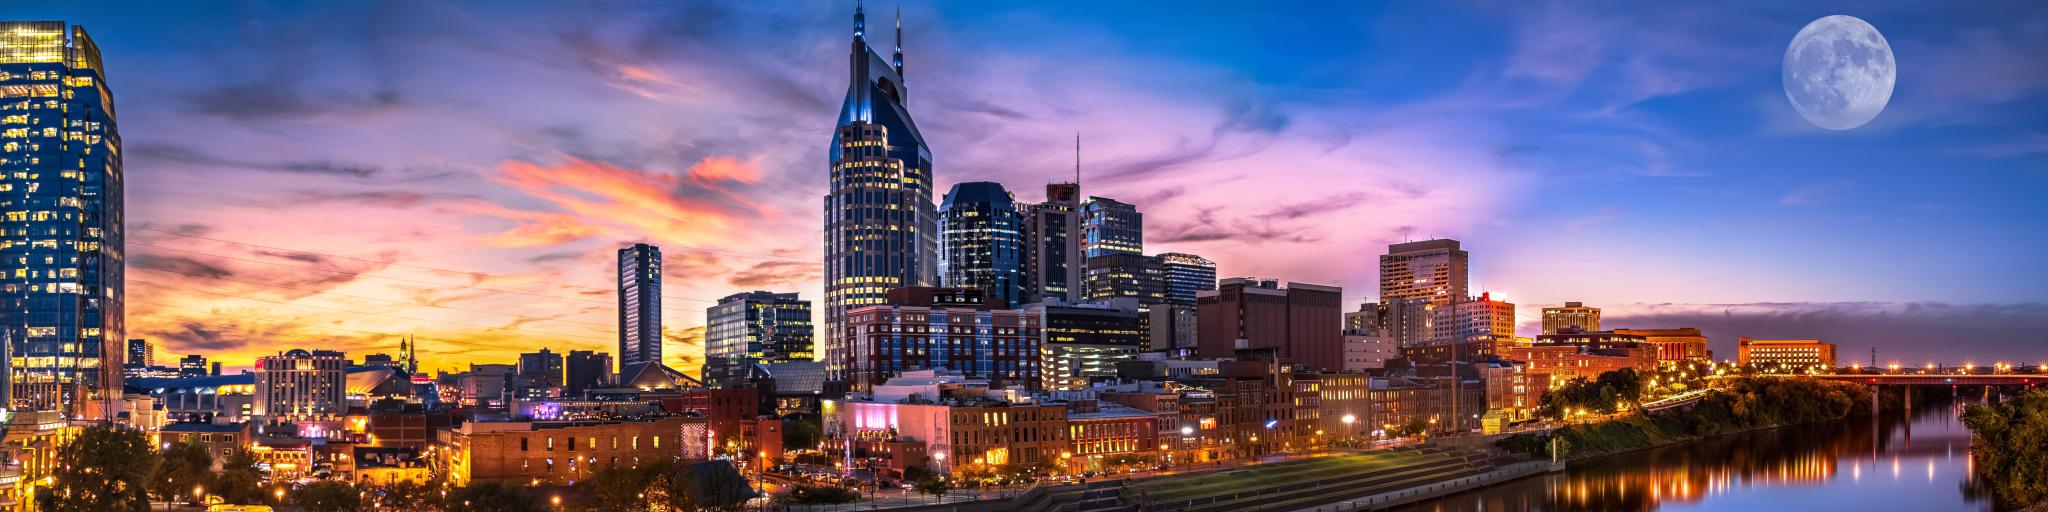 Colourful skyline of Nashville city as the moon enters the sky